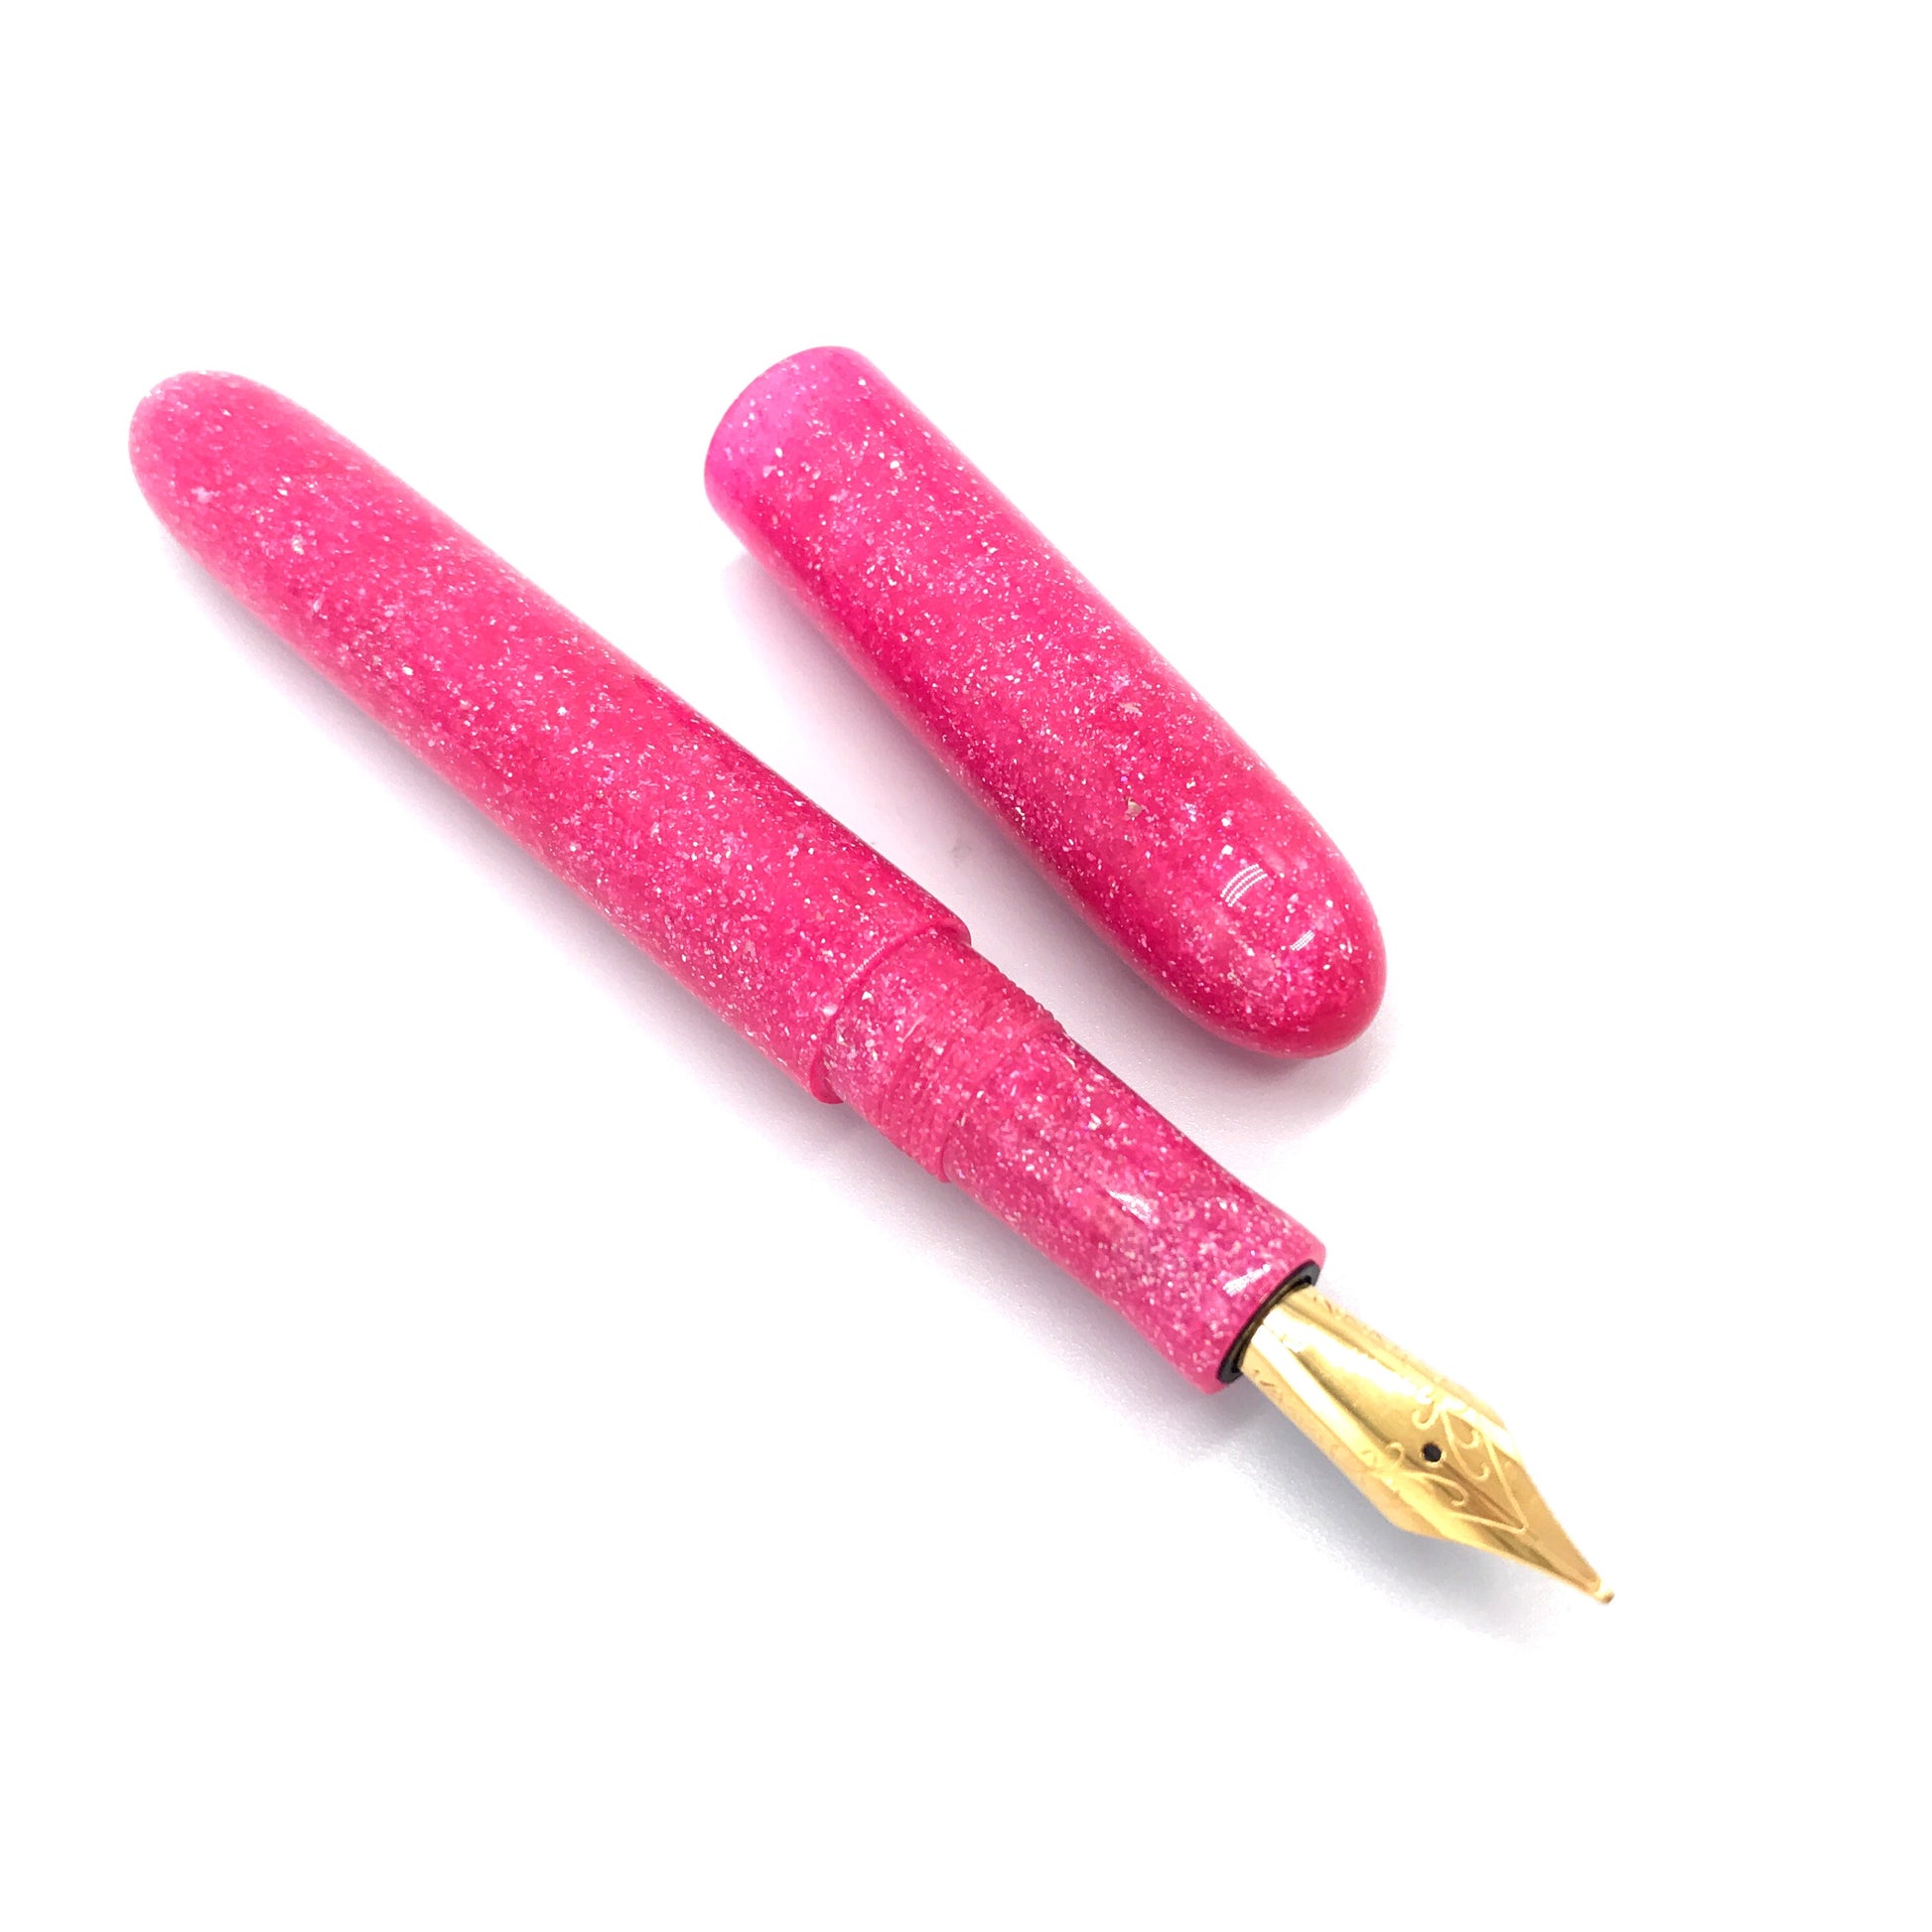 Fountain Pen-Iridium Fine Nib Writing Pen Set, Fancy Pen Gift Set for  Calligraphy Writing,with Converter,Smooth Writing (Pink)